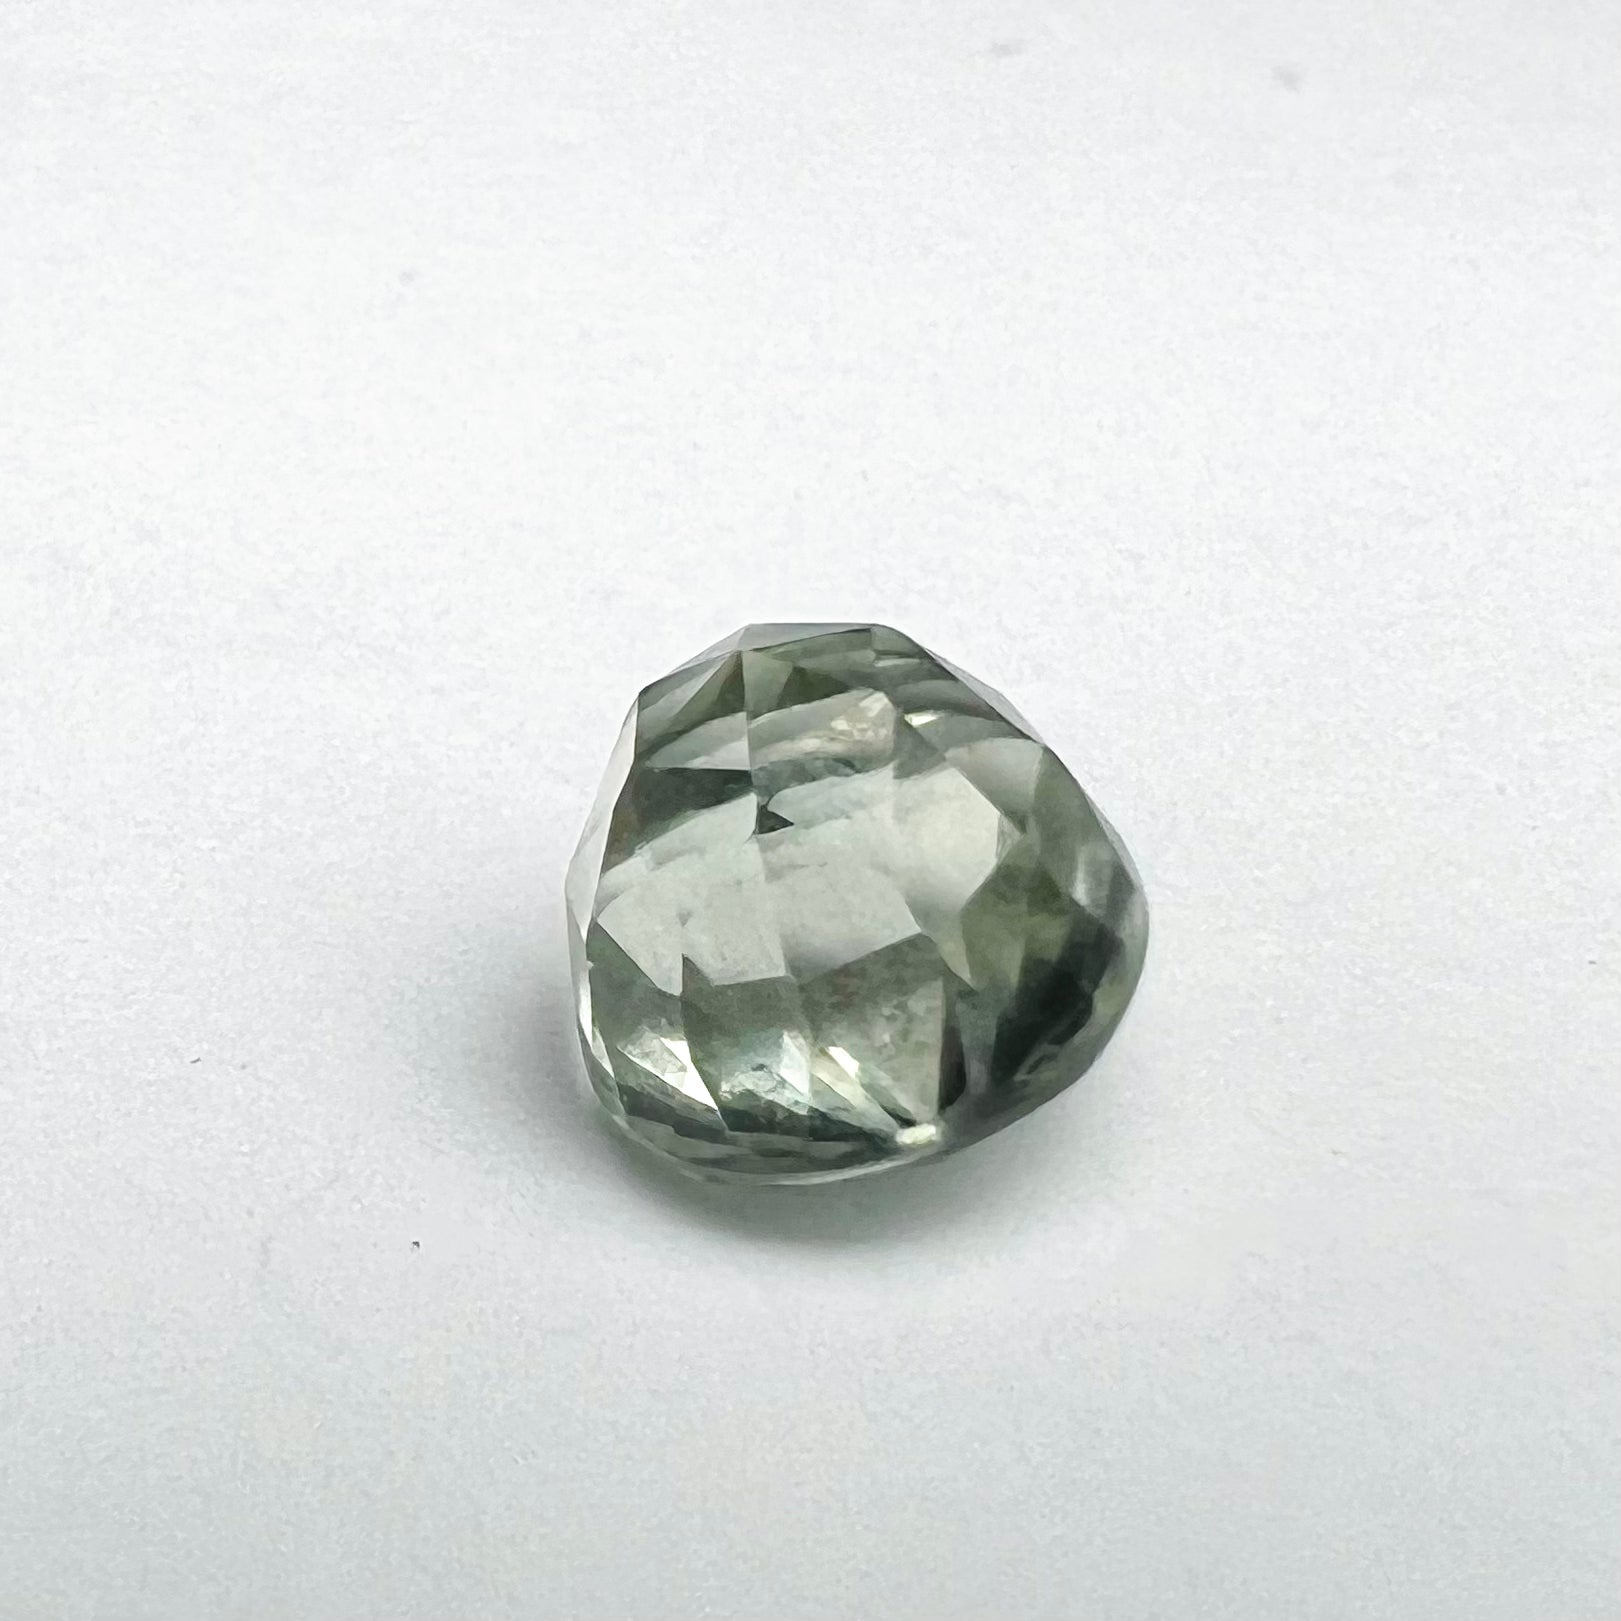 3.01CTW Loose Natural Fancy Cut Green Amethyst 7.96x7.06mm Earth mined Gemstone